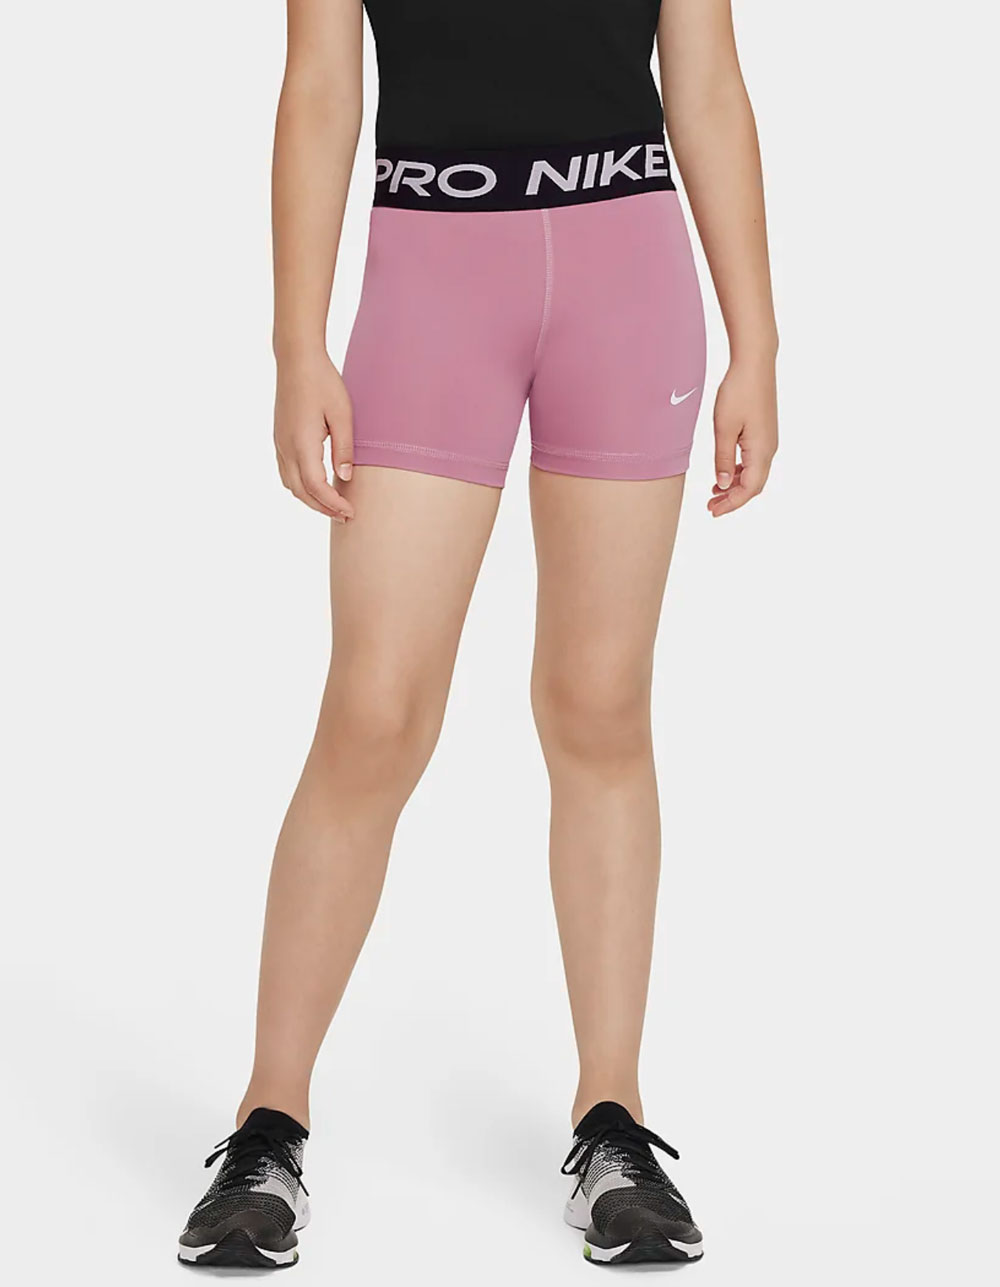 NIKE Girls Pro Shorts - PINK